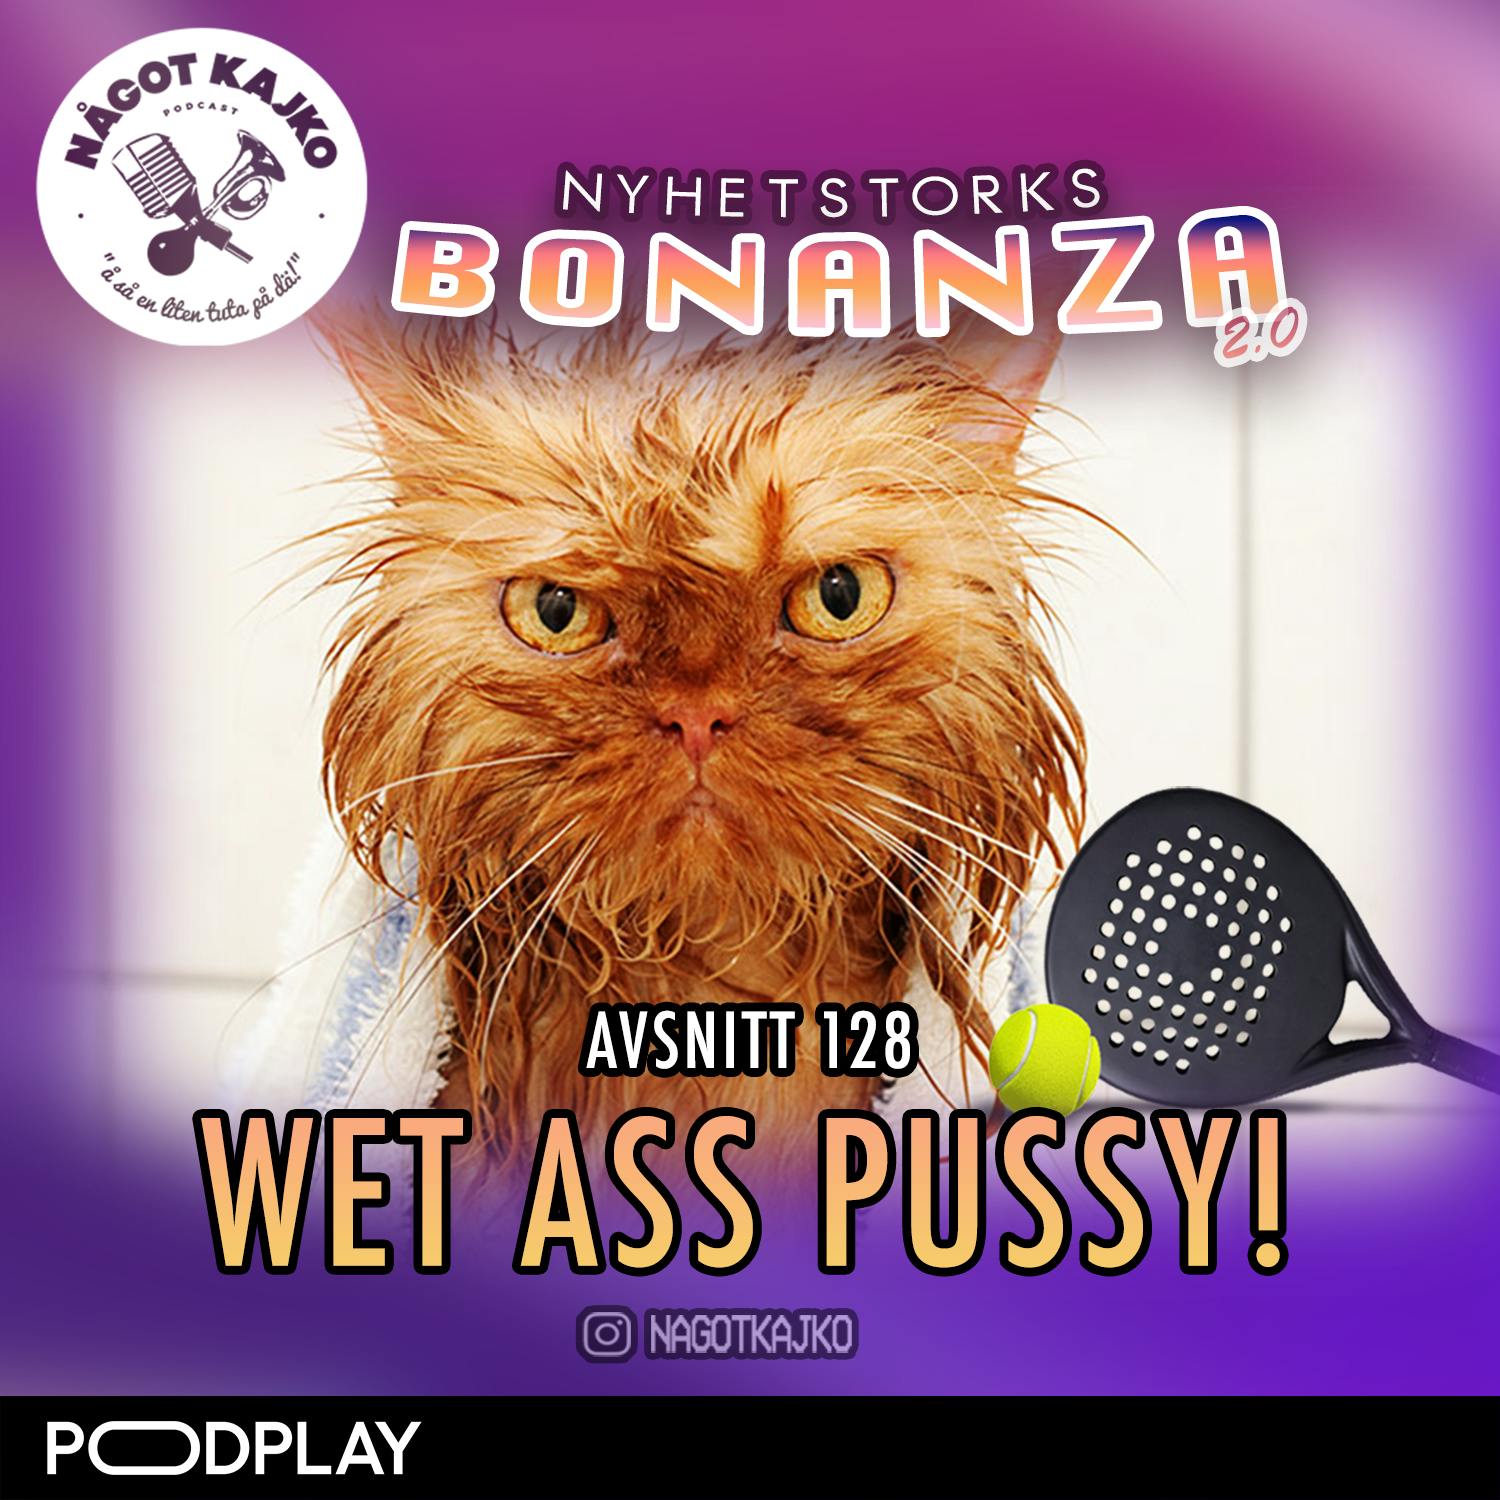 128. Wet Ass Pussy! - Nyhetstorksbonanza 2.0